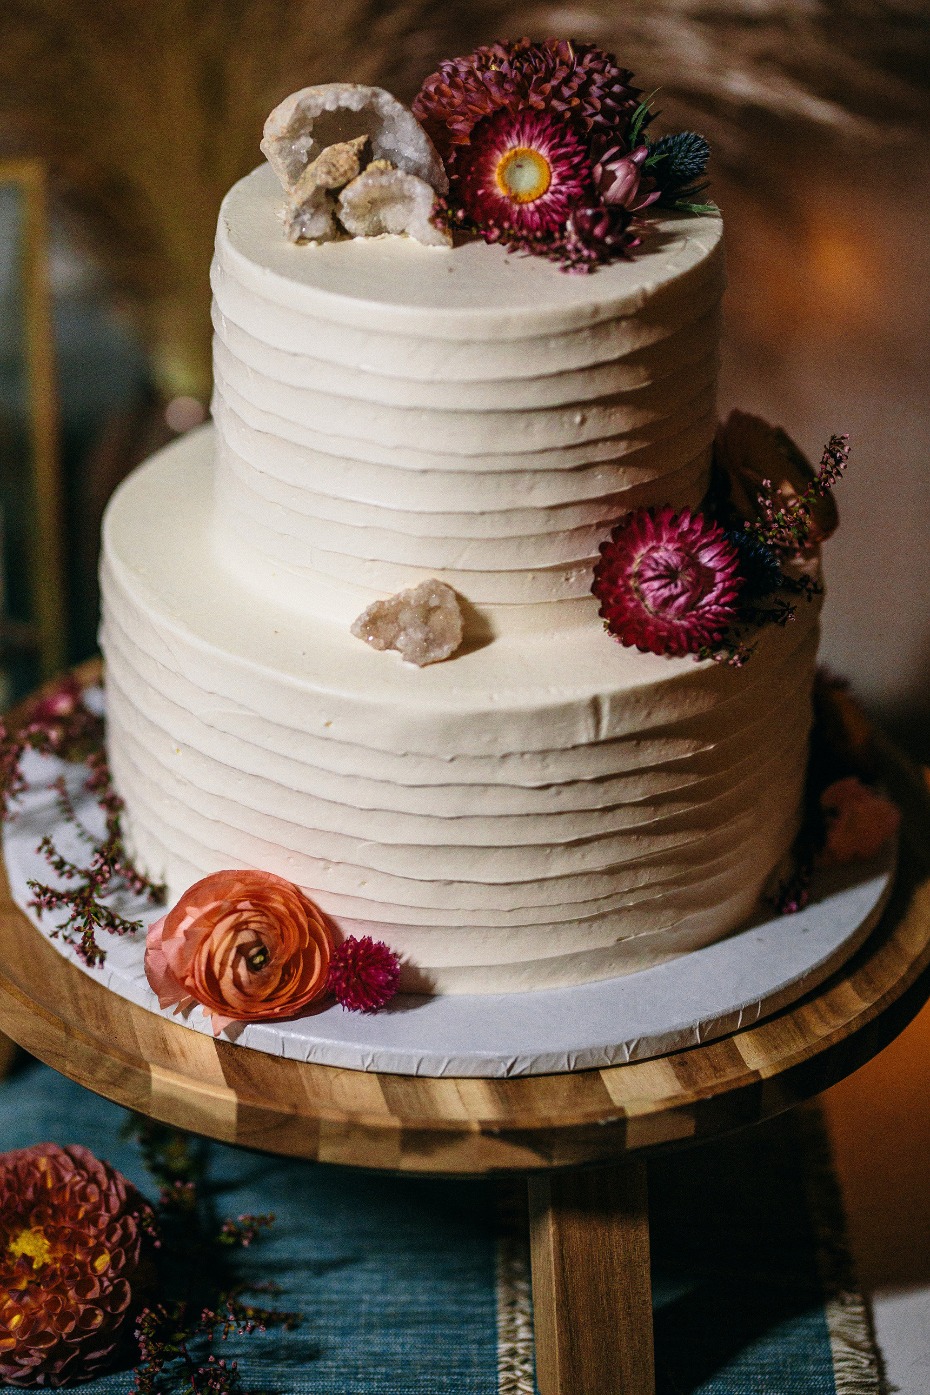 Geode and flower wedding cake